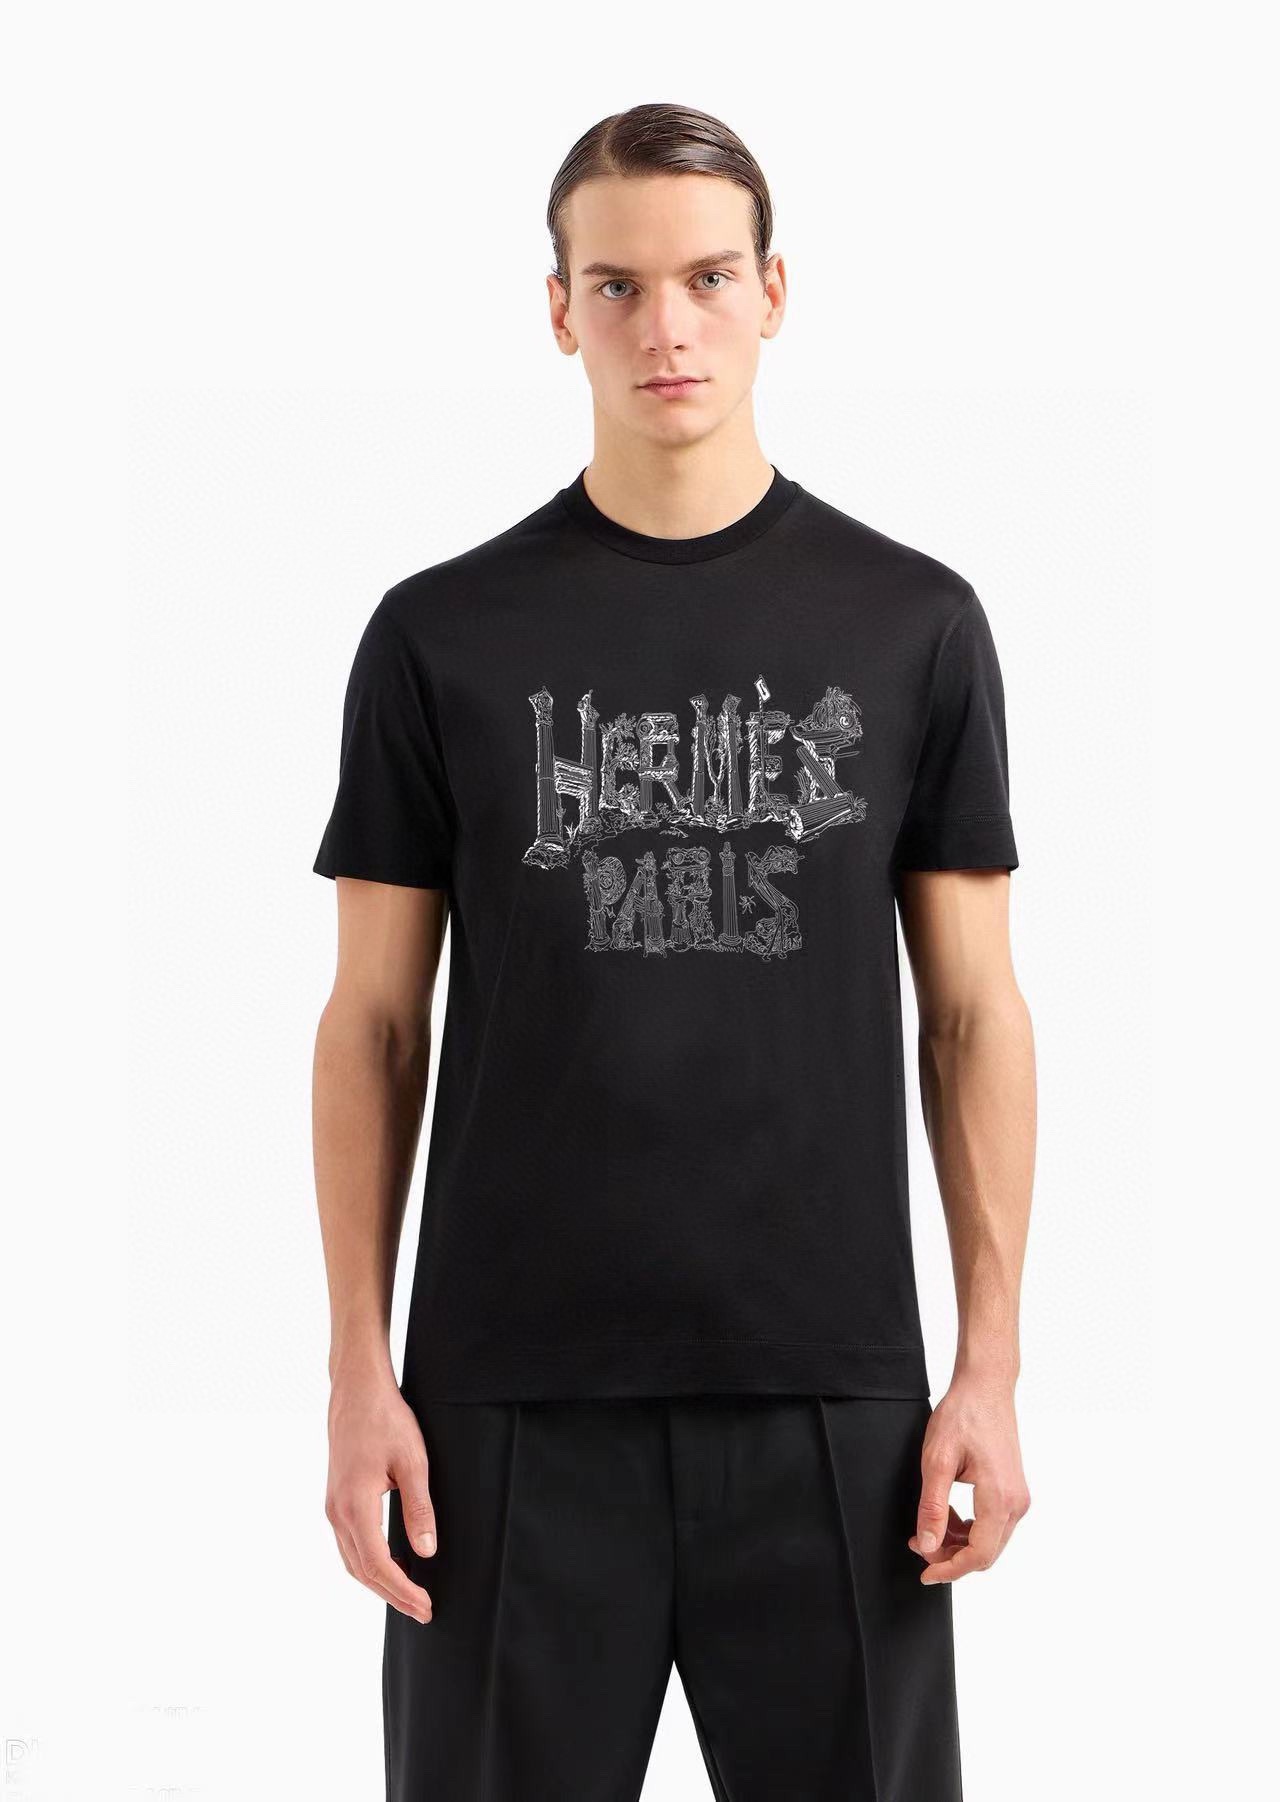 Hermes爱马仕款式男款短袖T恤衫T-shirt全新升级百搭基础款低调奢华品格之选！甄选进口丝光棉打造